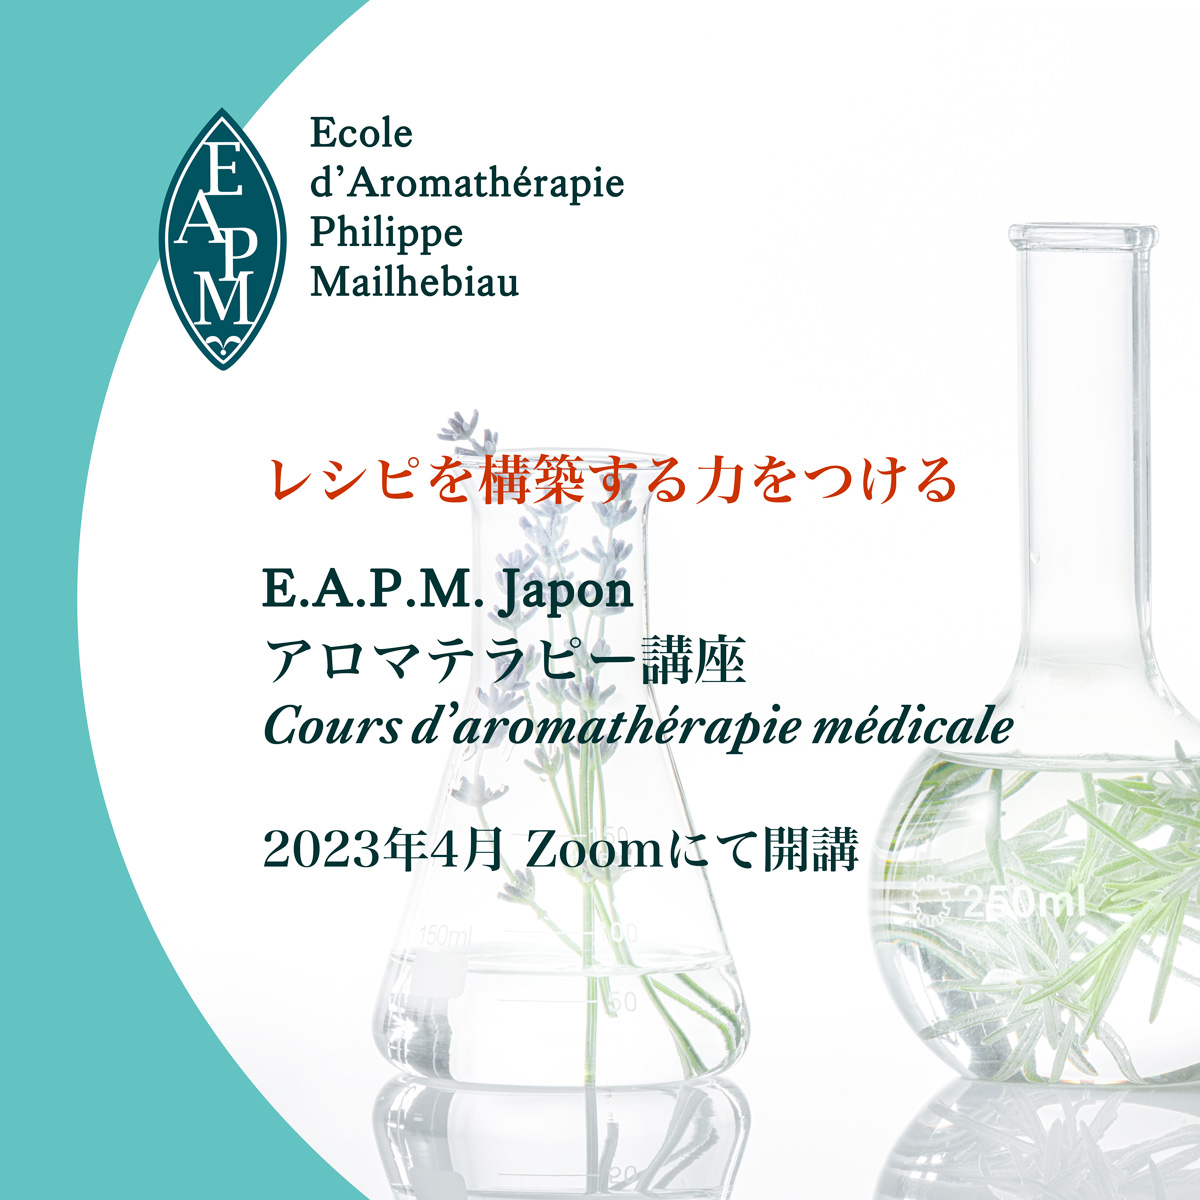 E.A.P.M. Japon アロマテラピー講座 2023年春期 お申込み受付中